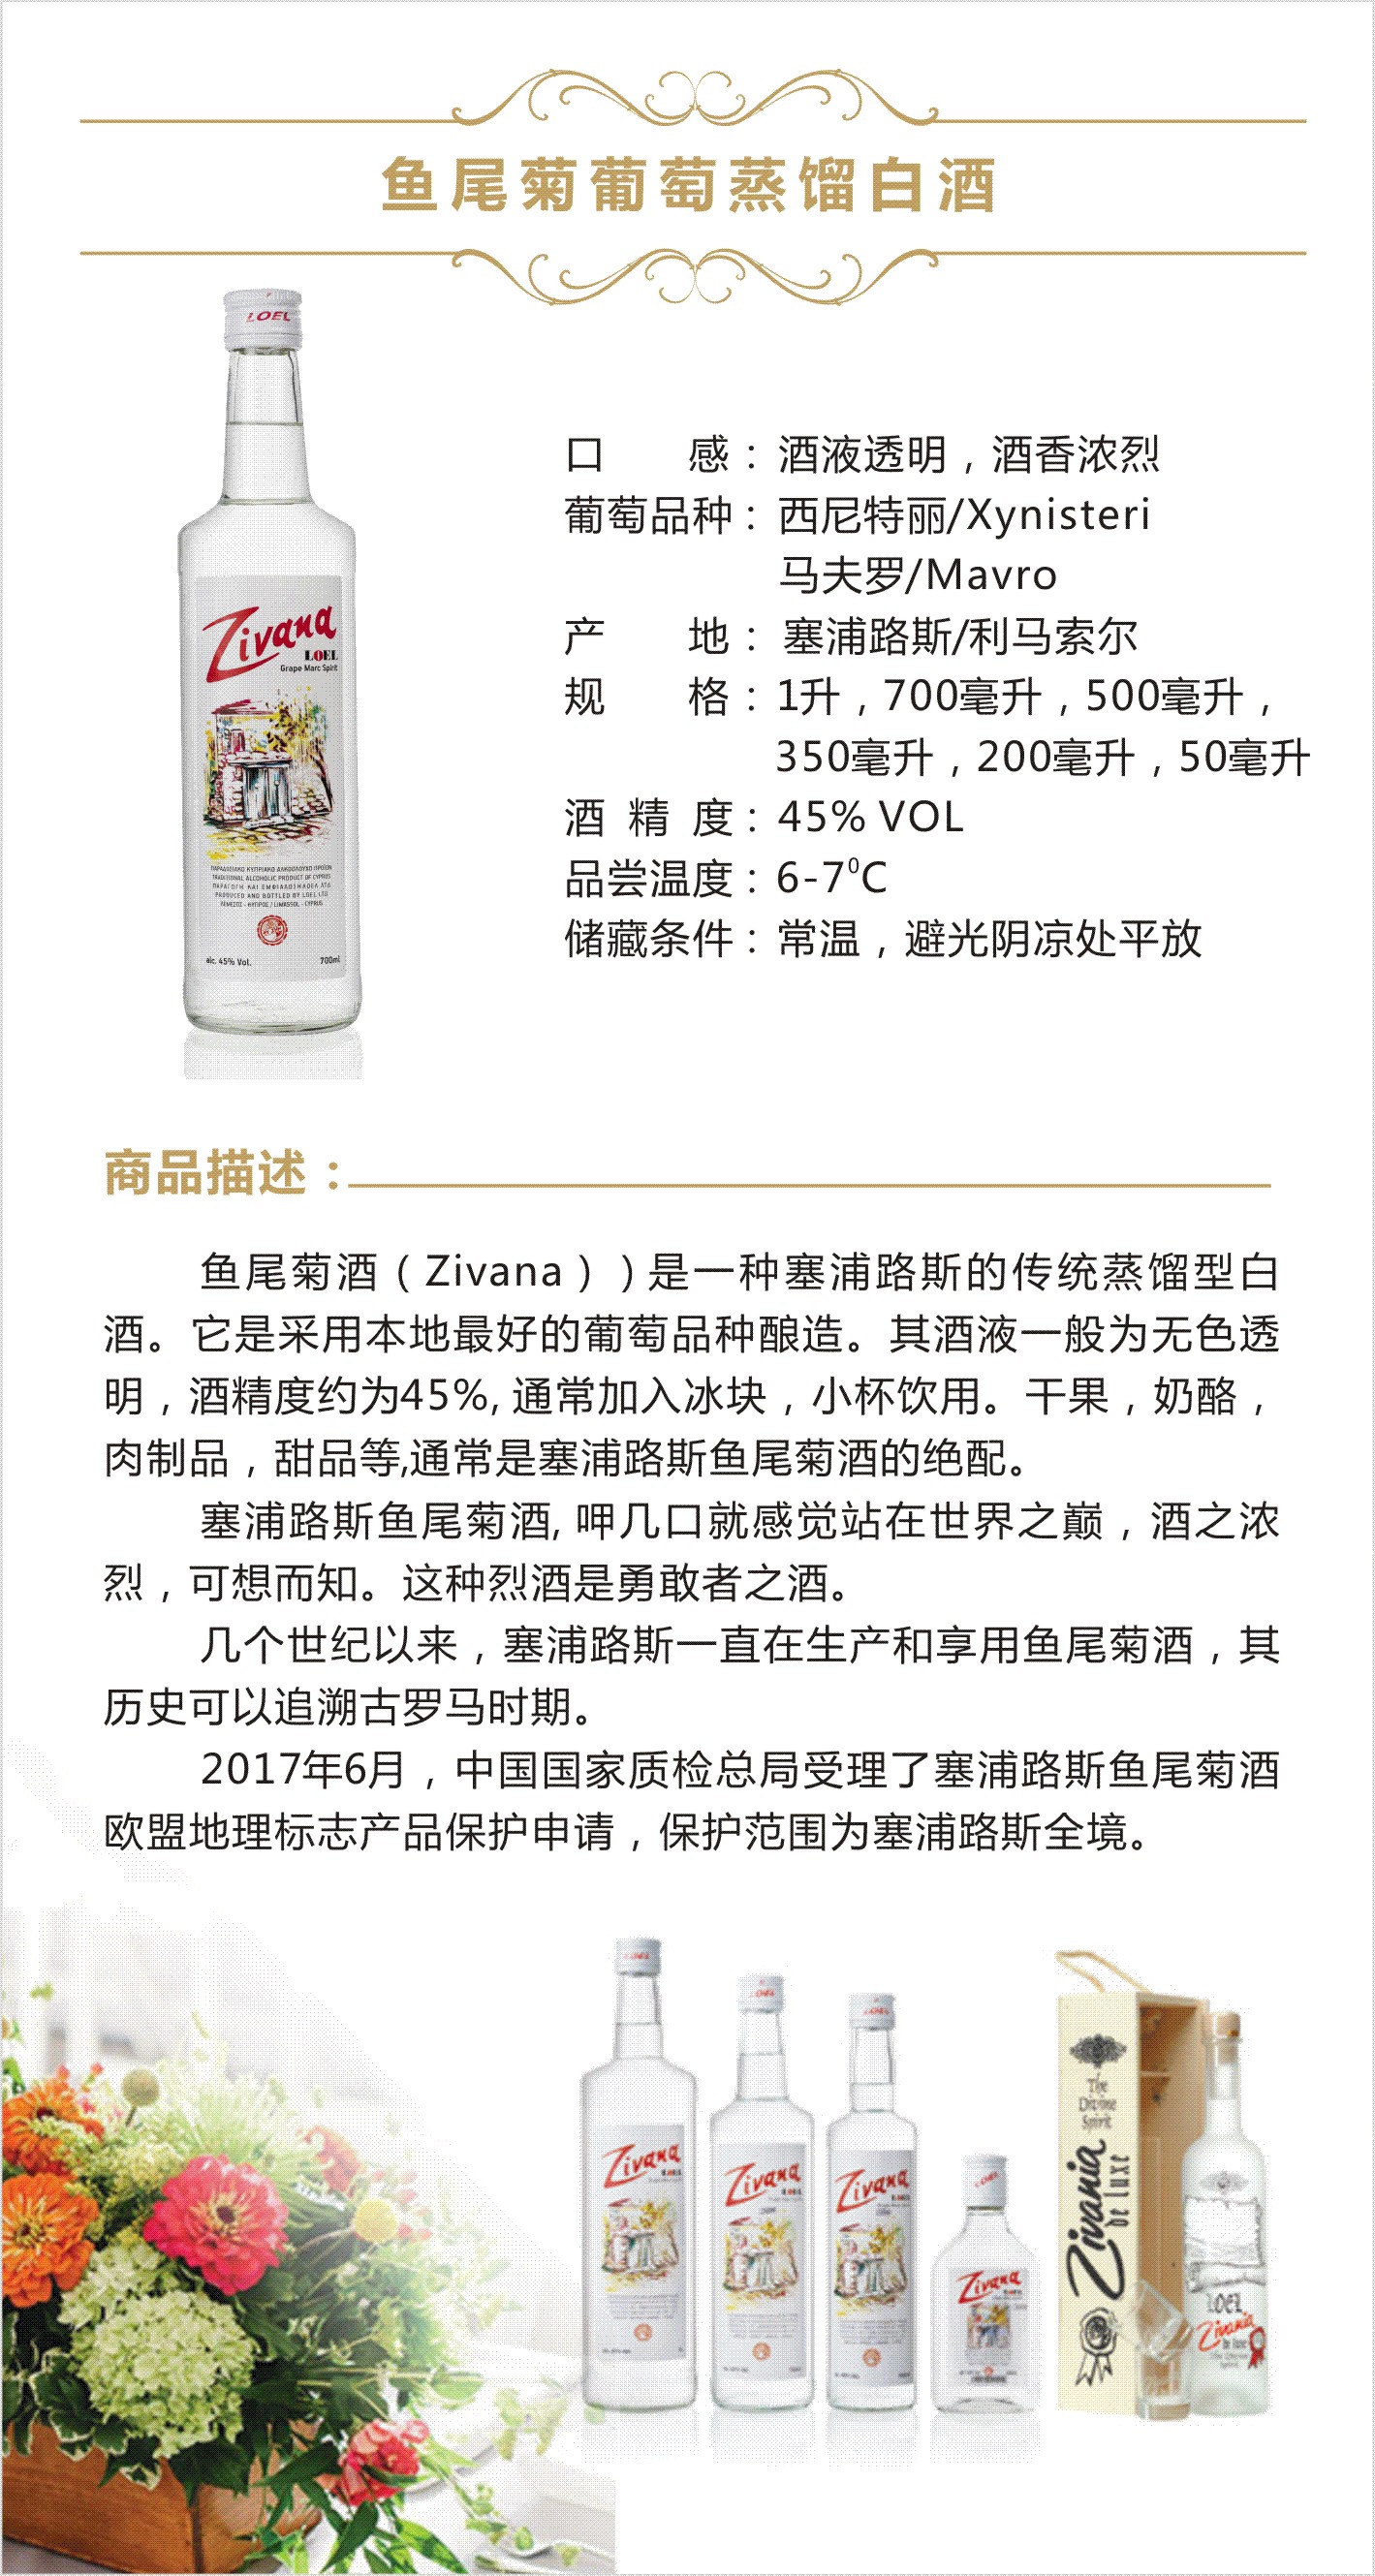 Zivana grape marc spirit (45% VOL)